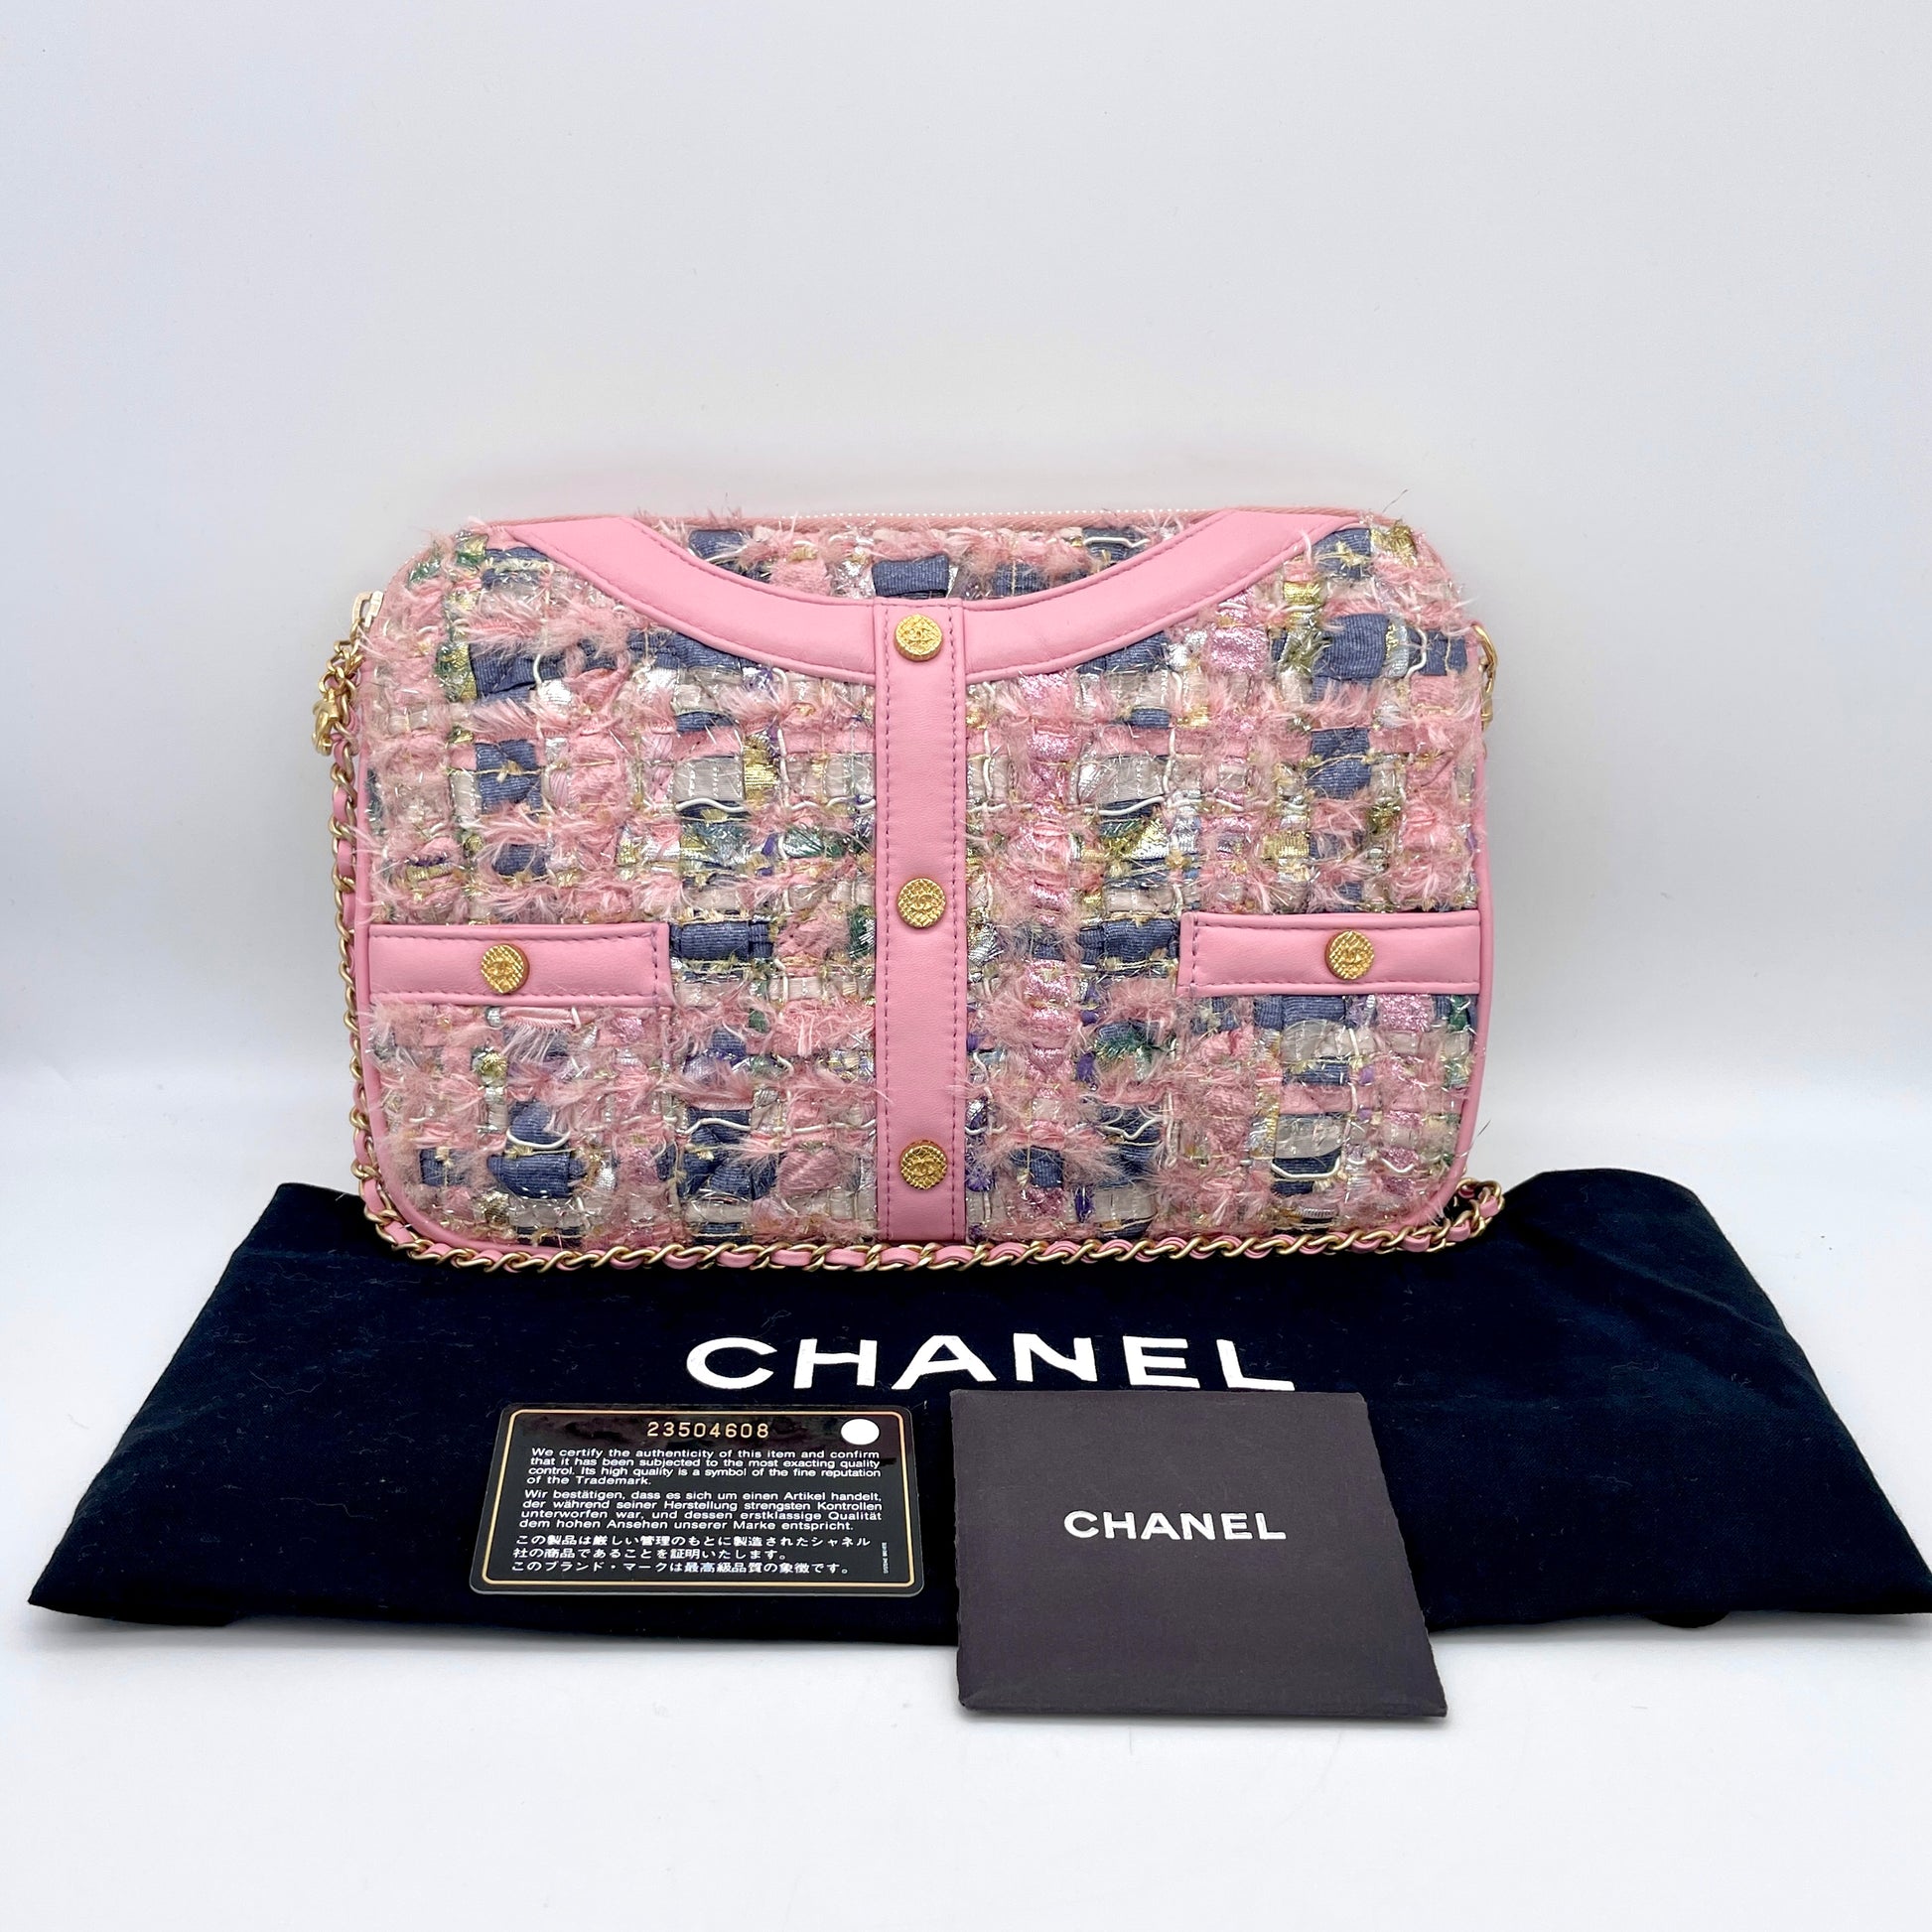 Chelsea Vintage Couture - 2012 Chanel Accordion flap bag - perfect